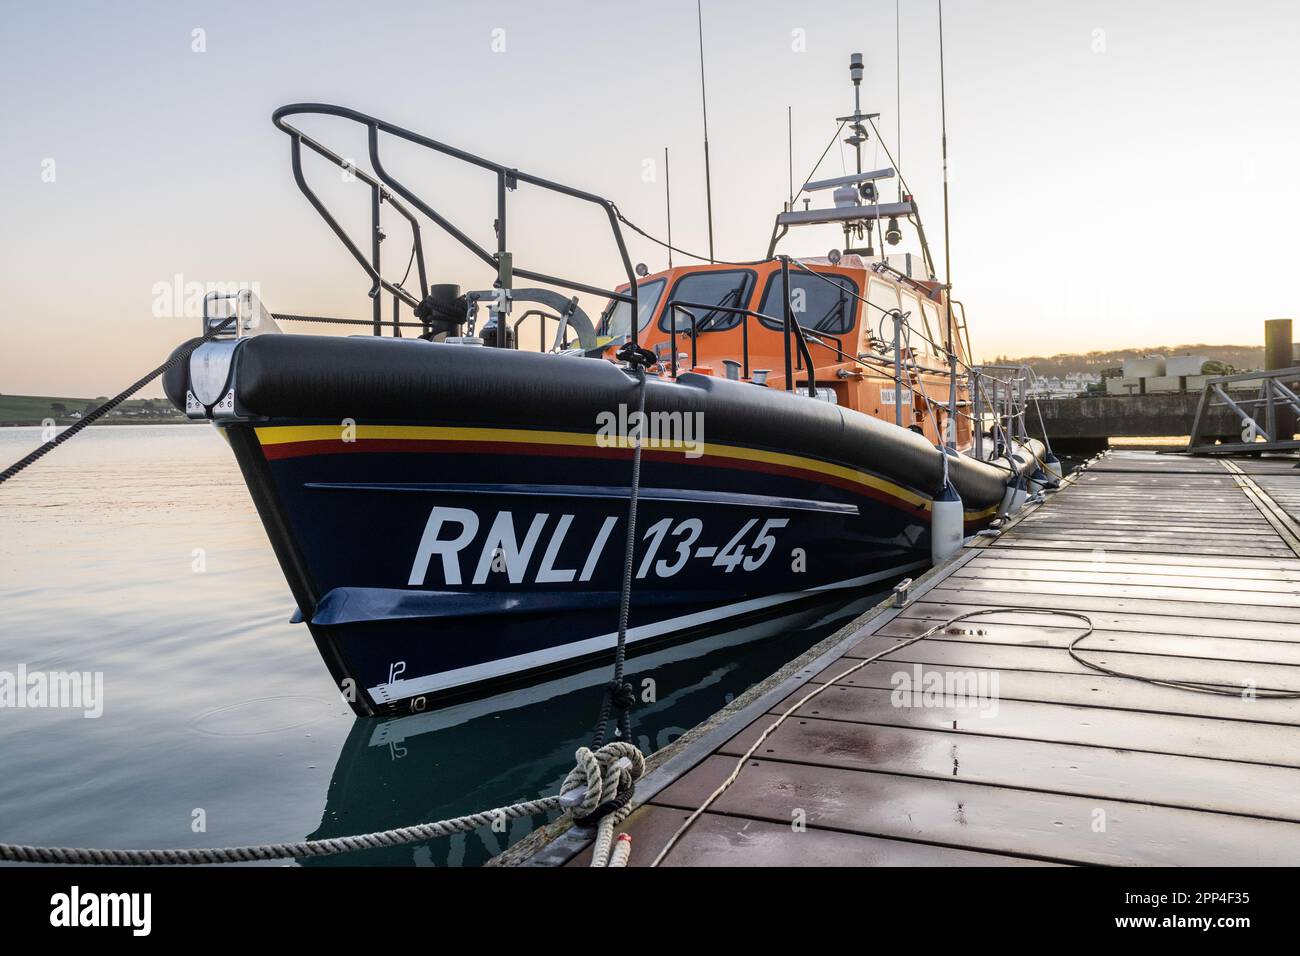 RNLI Lifeboat Val Adnams 13-45 ormeggiato a Courtmacsherry, West Cork, Irlanda. Foto Stock